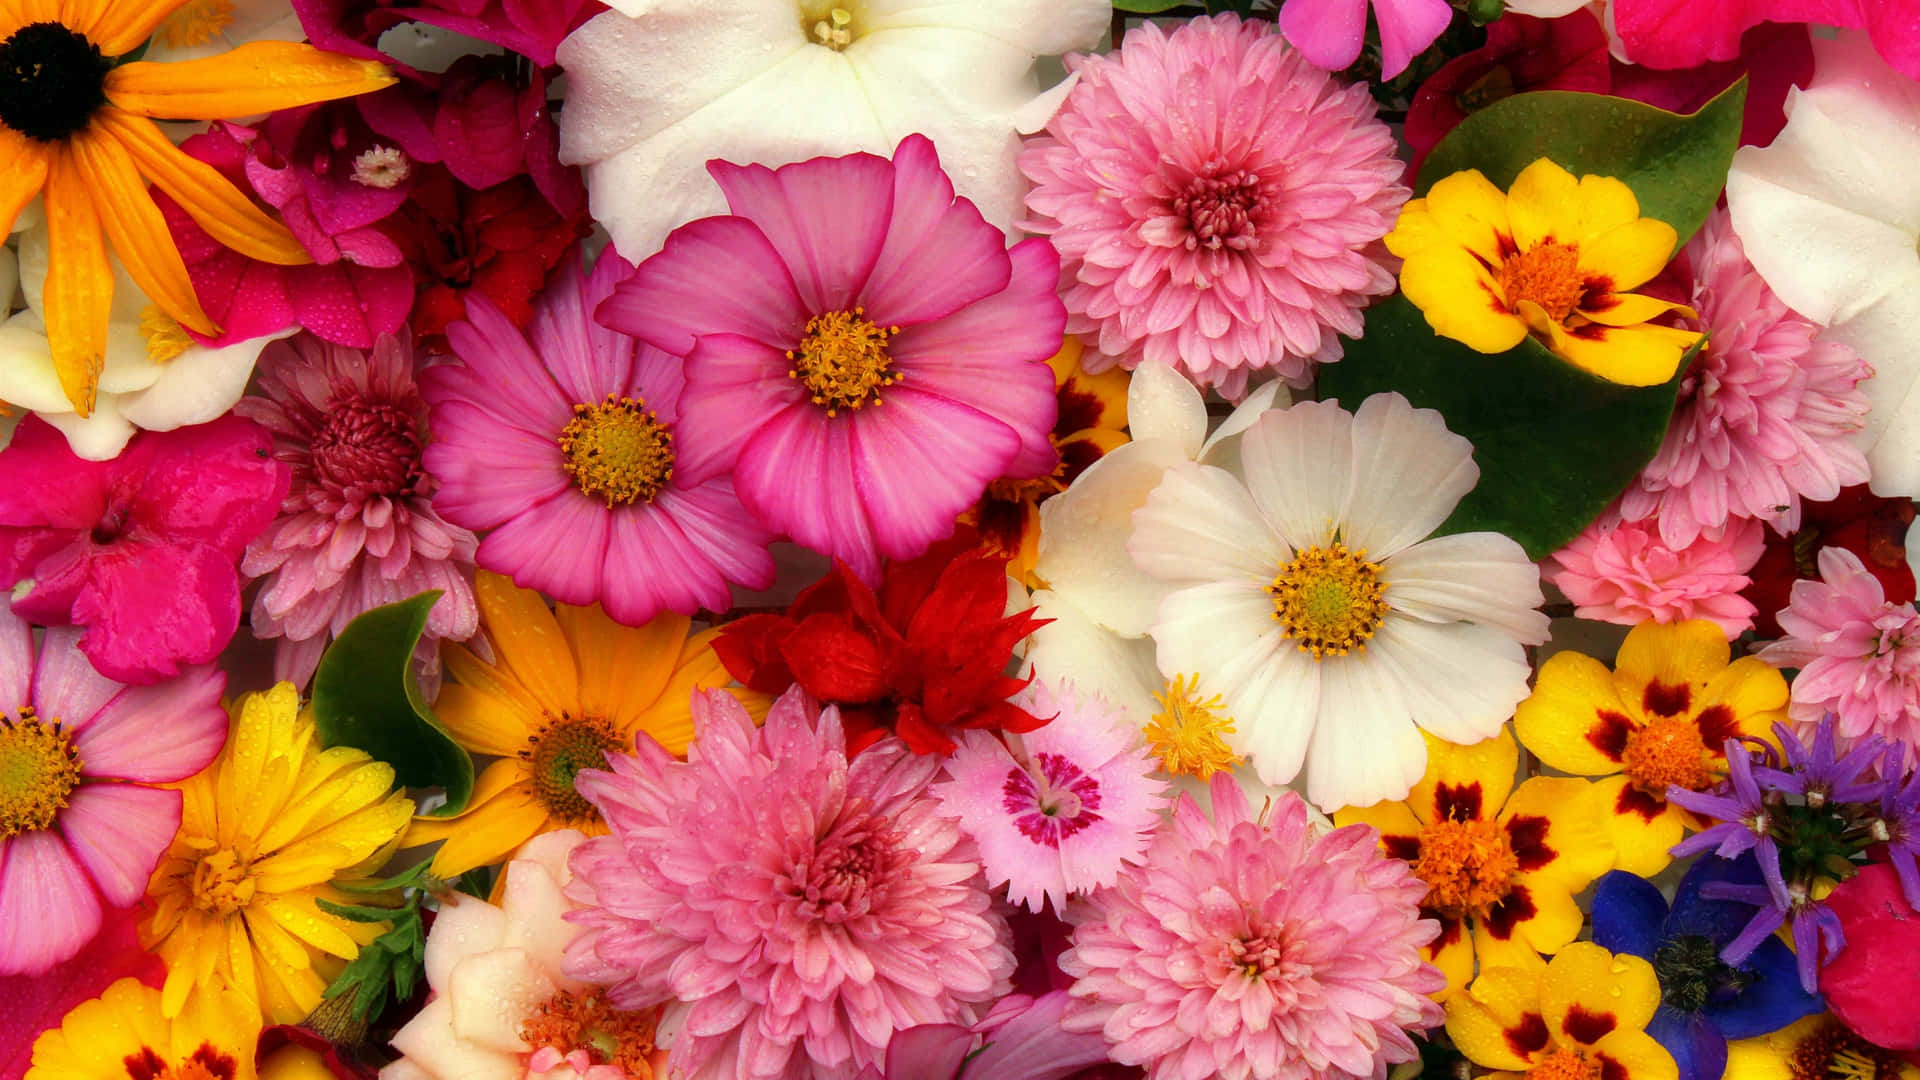 Download Colorful Arrangement 4K Flowers Background | Wallpapers.com